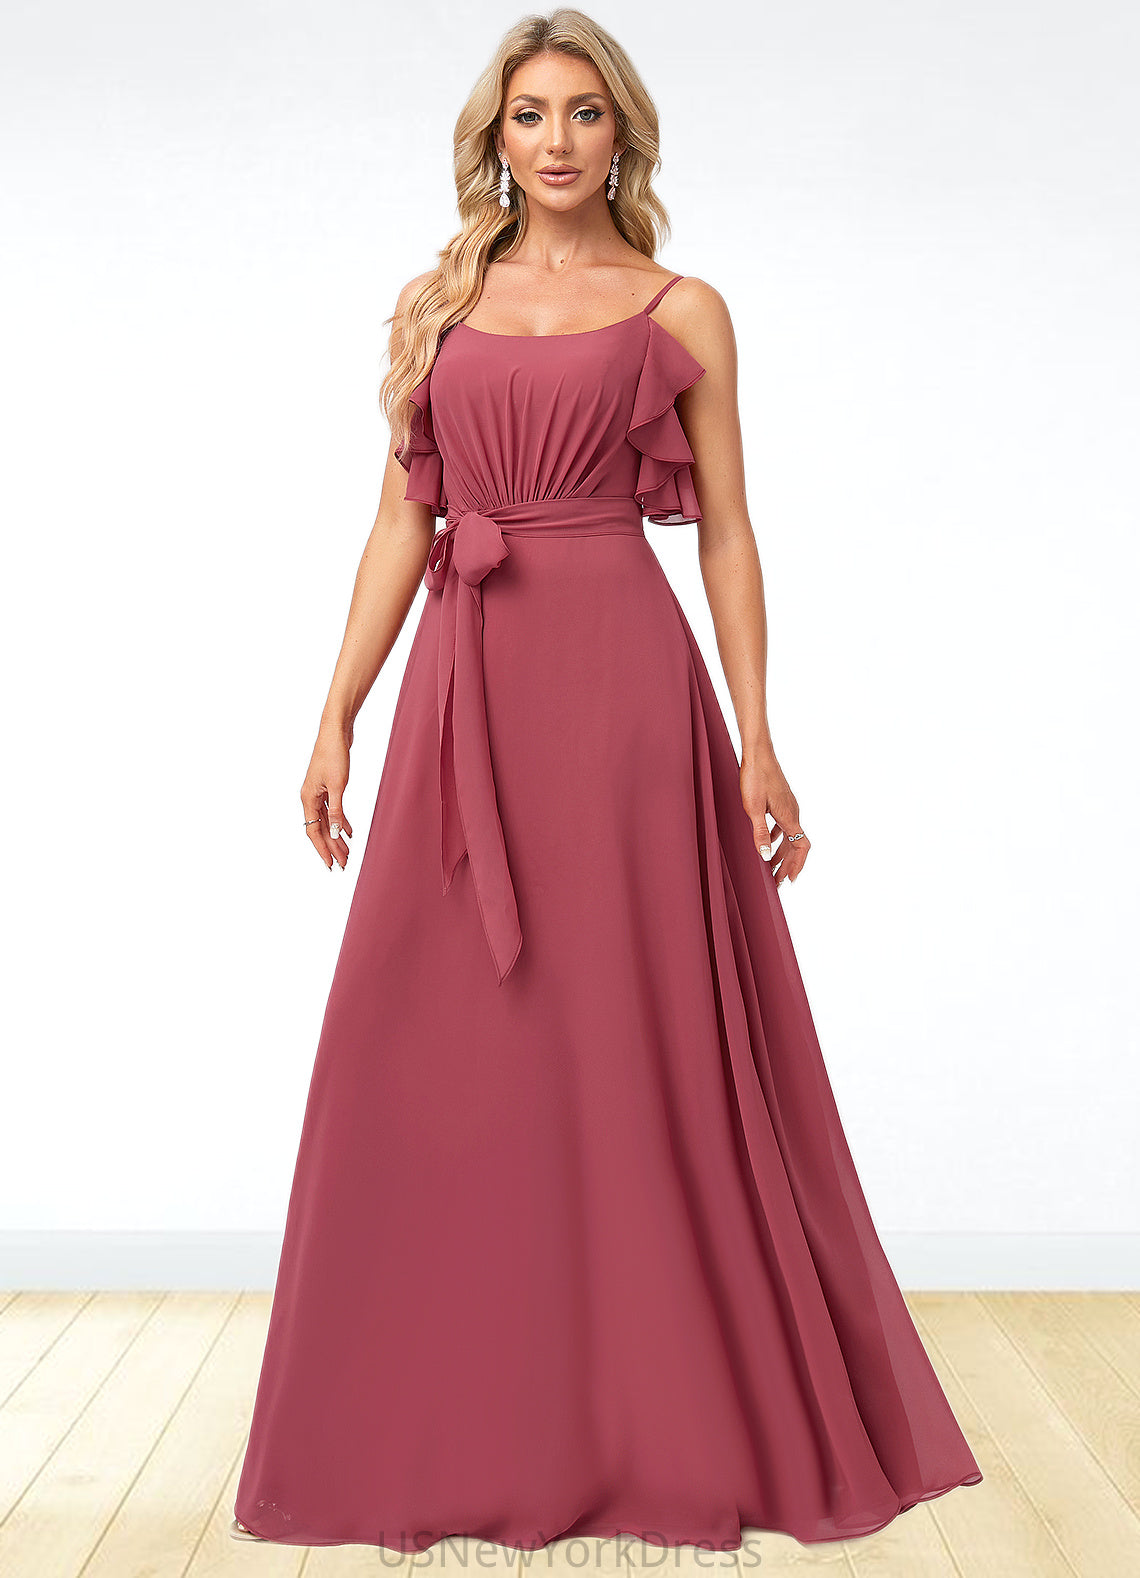 Sonia A-line V-Neck Floor-Length Chiffon Bridesmaid Dress With Ruffle DJP0022604